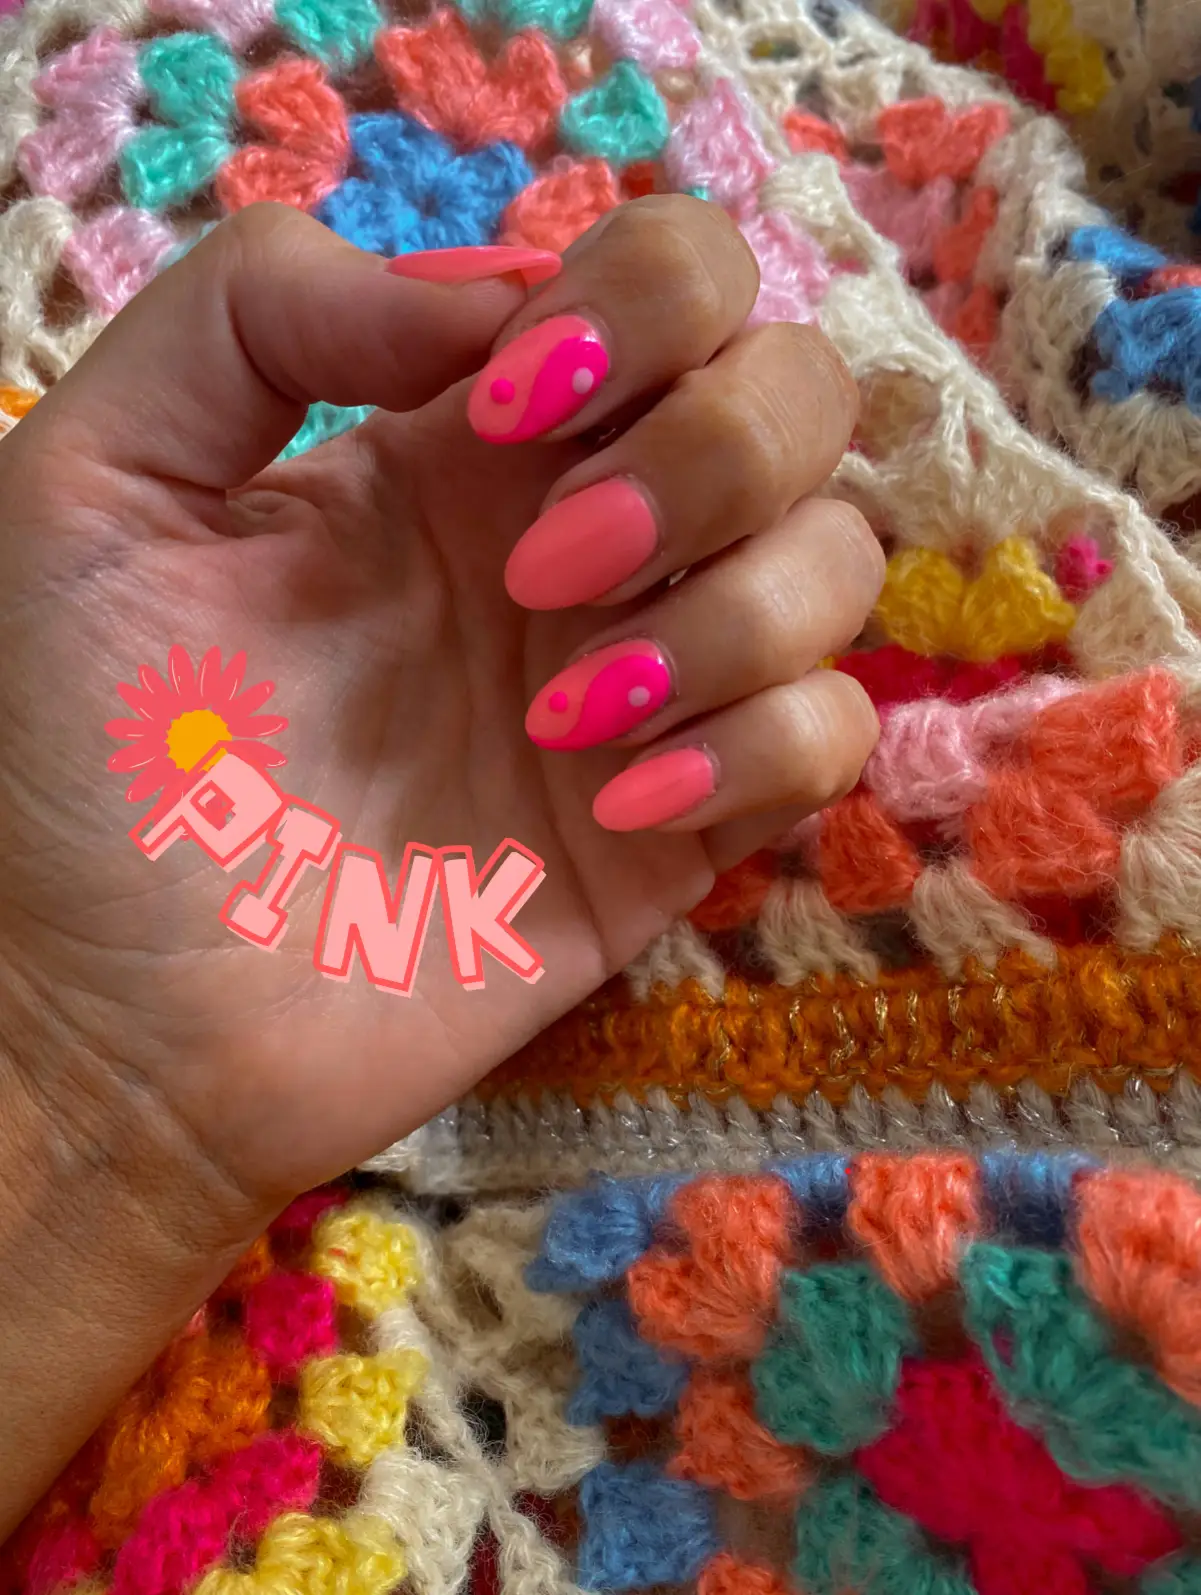 green - Lemon8 Search nails pink blie